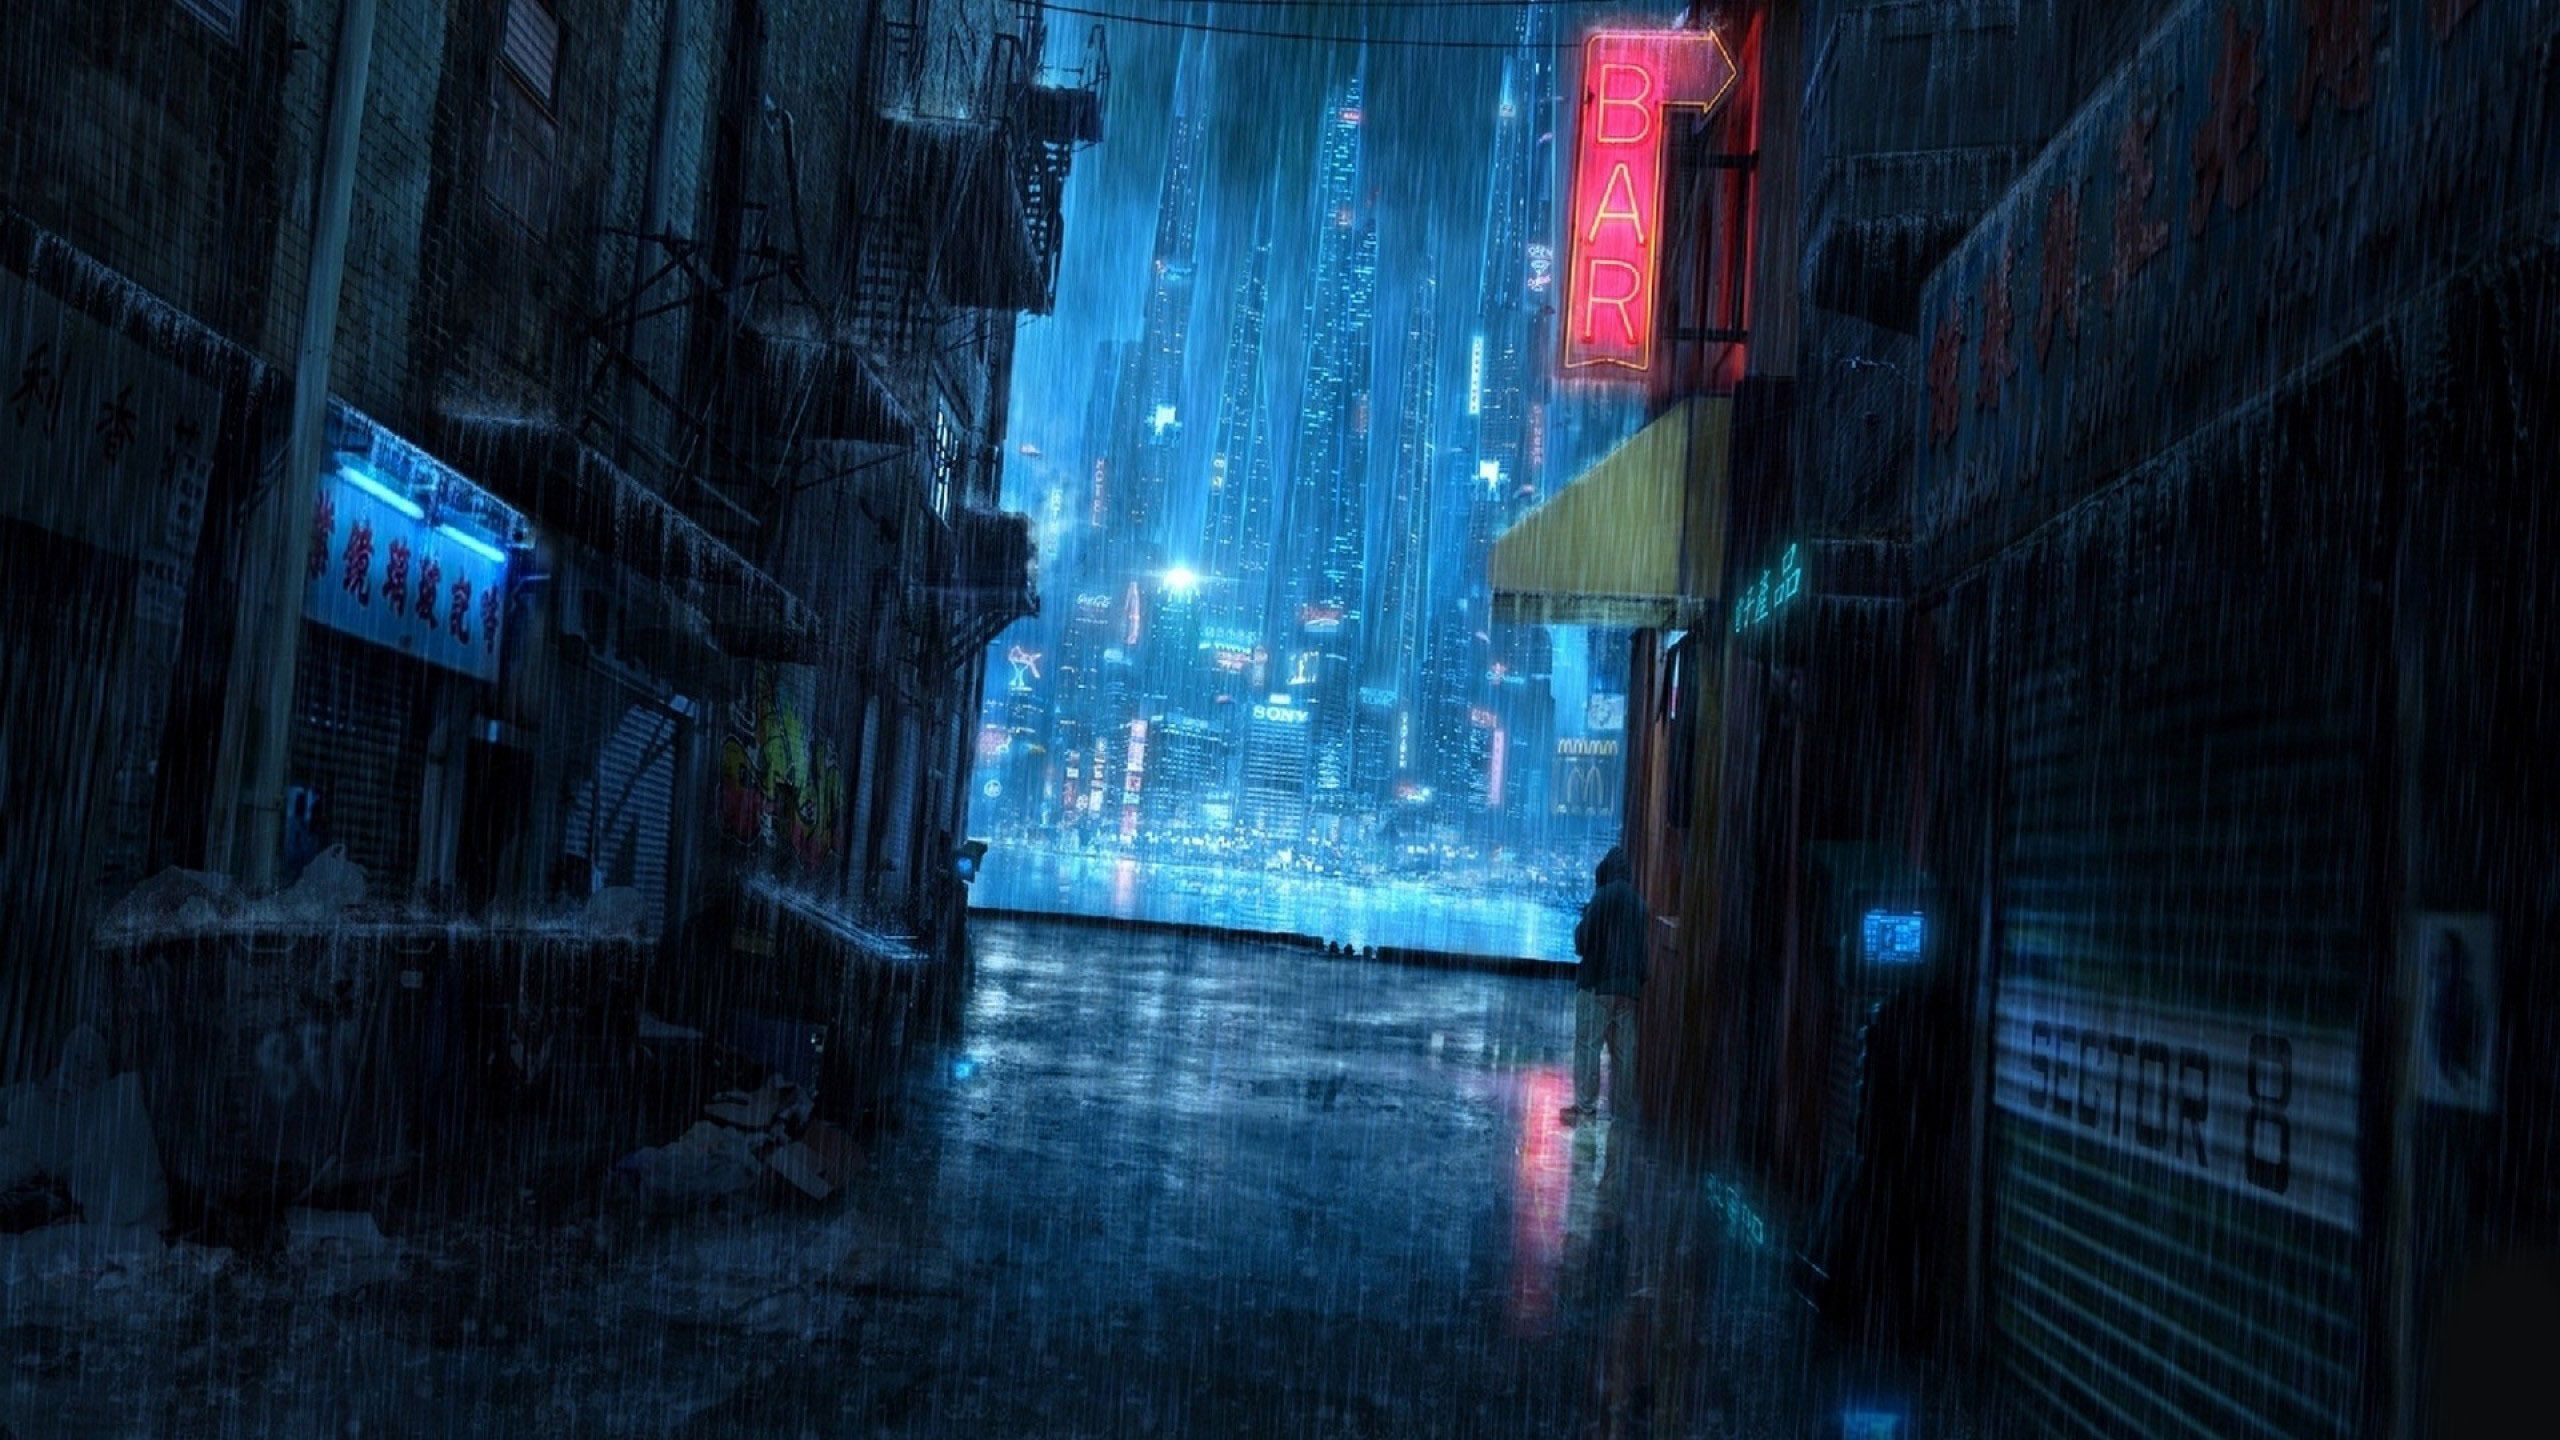 Anime scenery wallpaper, Cyberpunk city .com